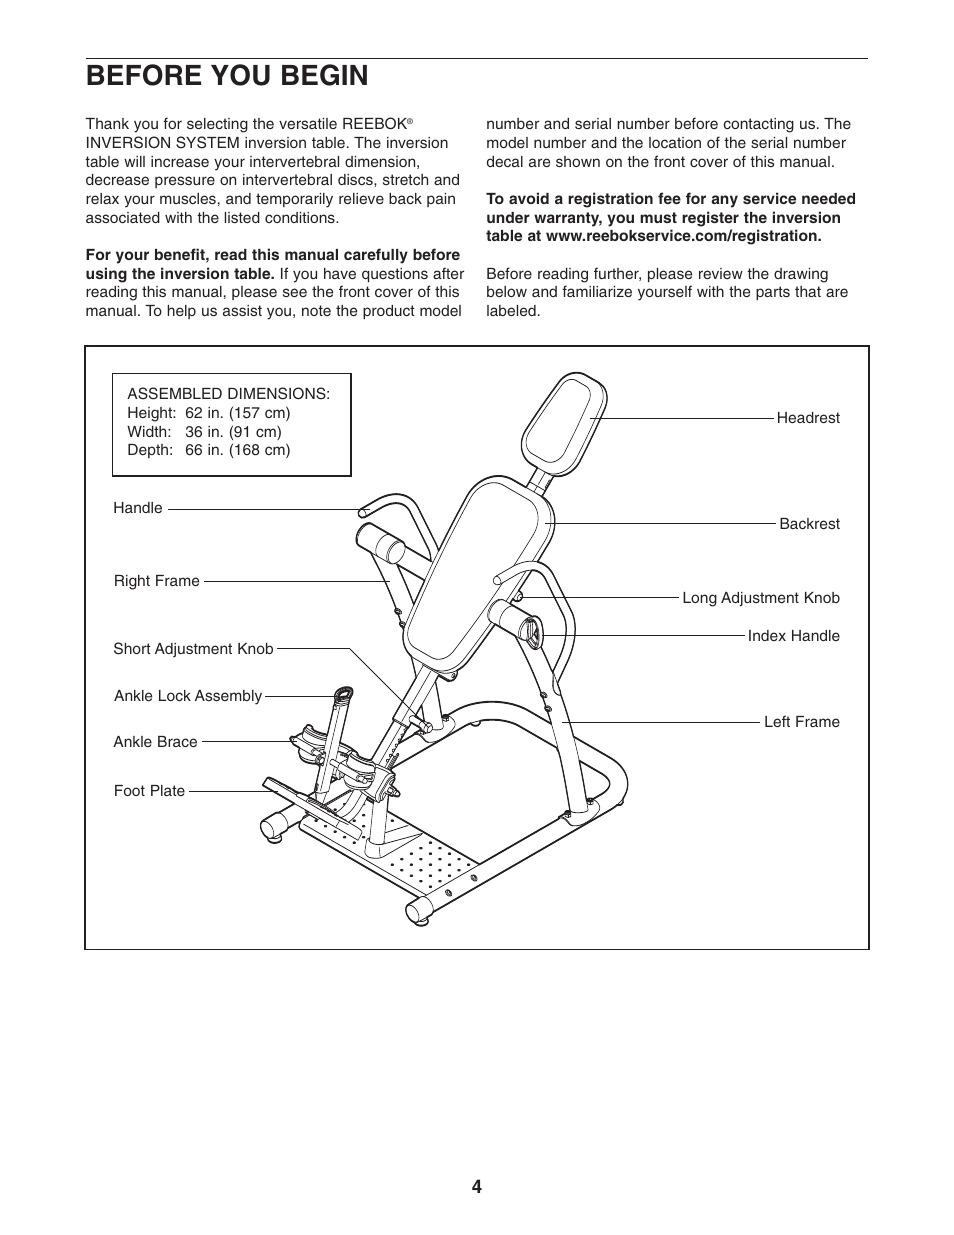 reebok inversion table manual off 56 